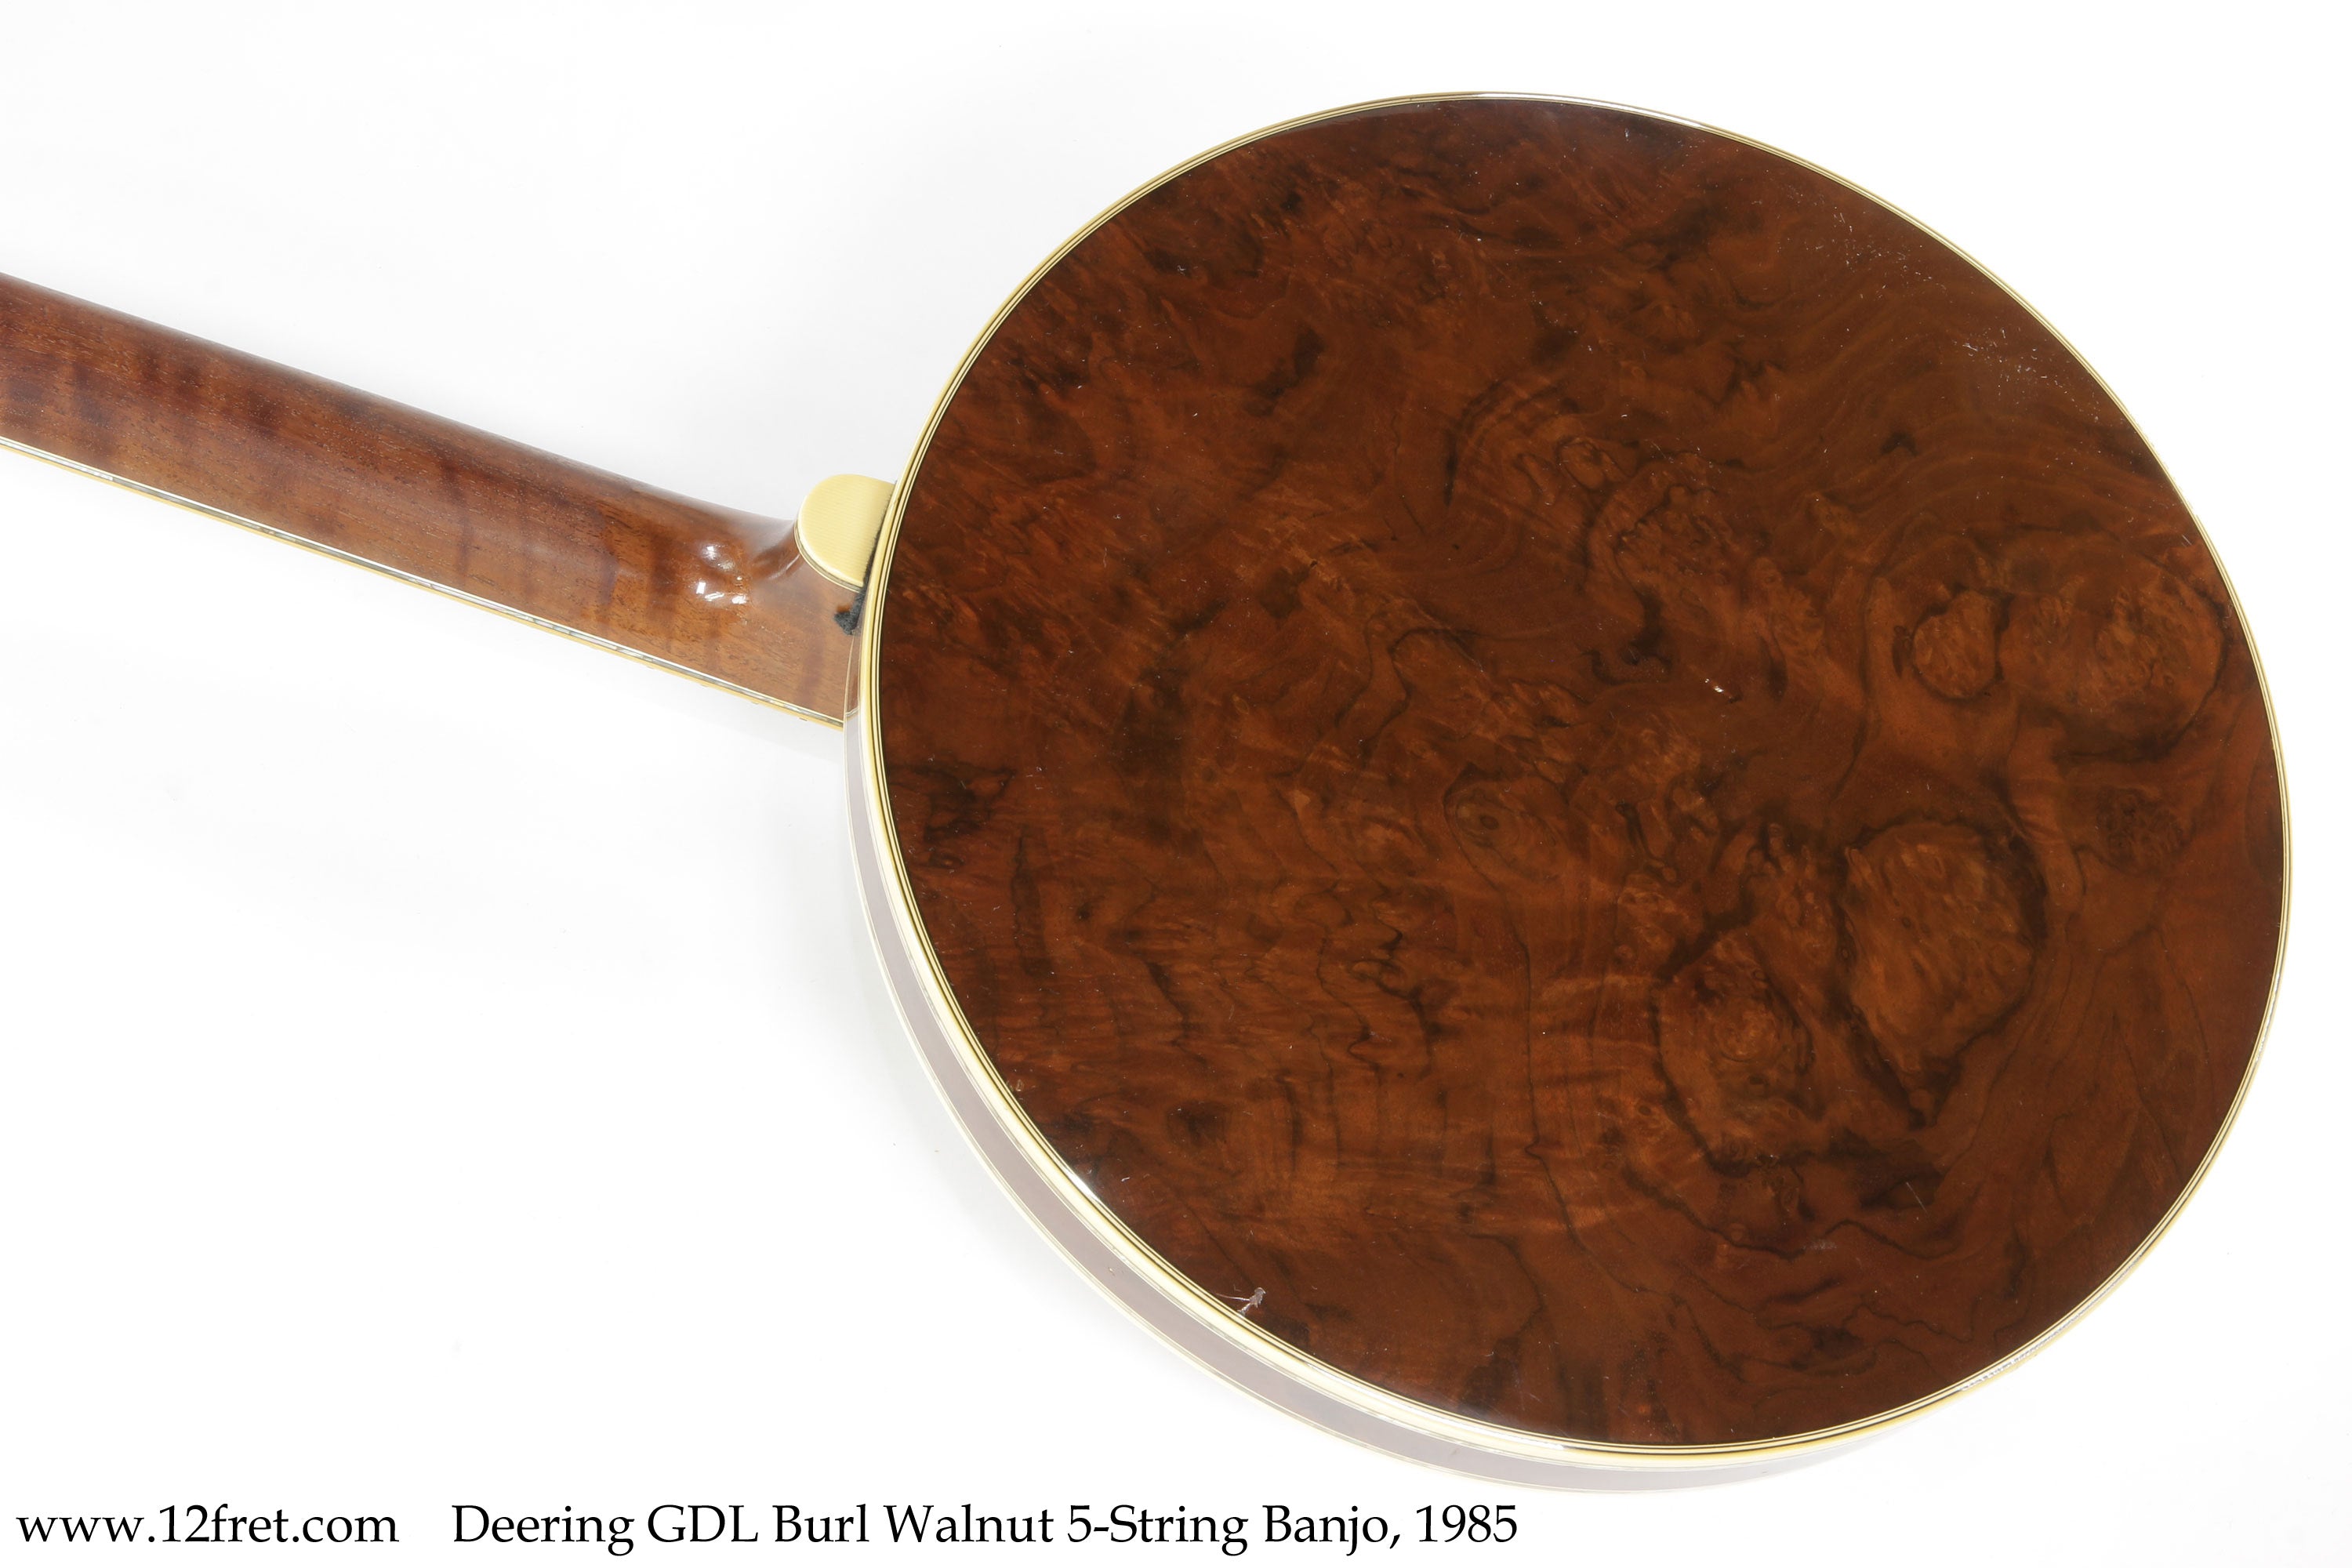 Deering GDL Burl Deering GDL Burl Walnut 5-String Banjo, 1985 - The Twelfth FretWalnut 5-String Banjo, 1985 